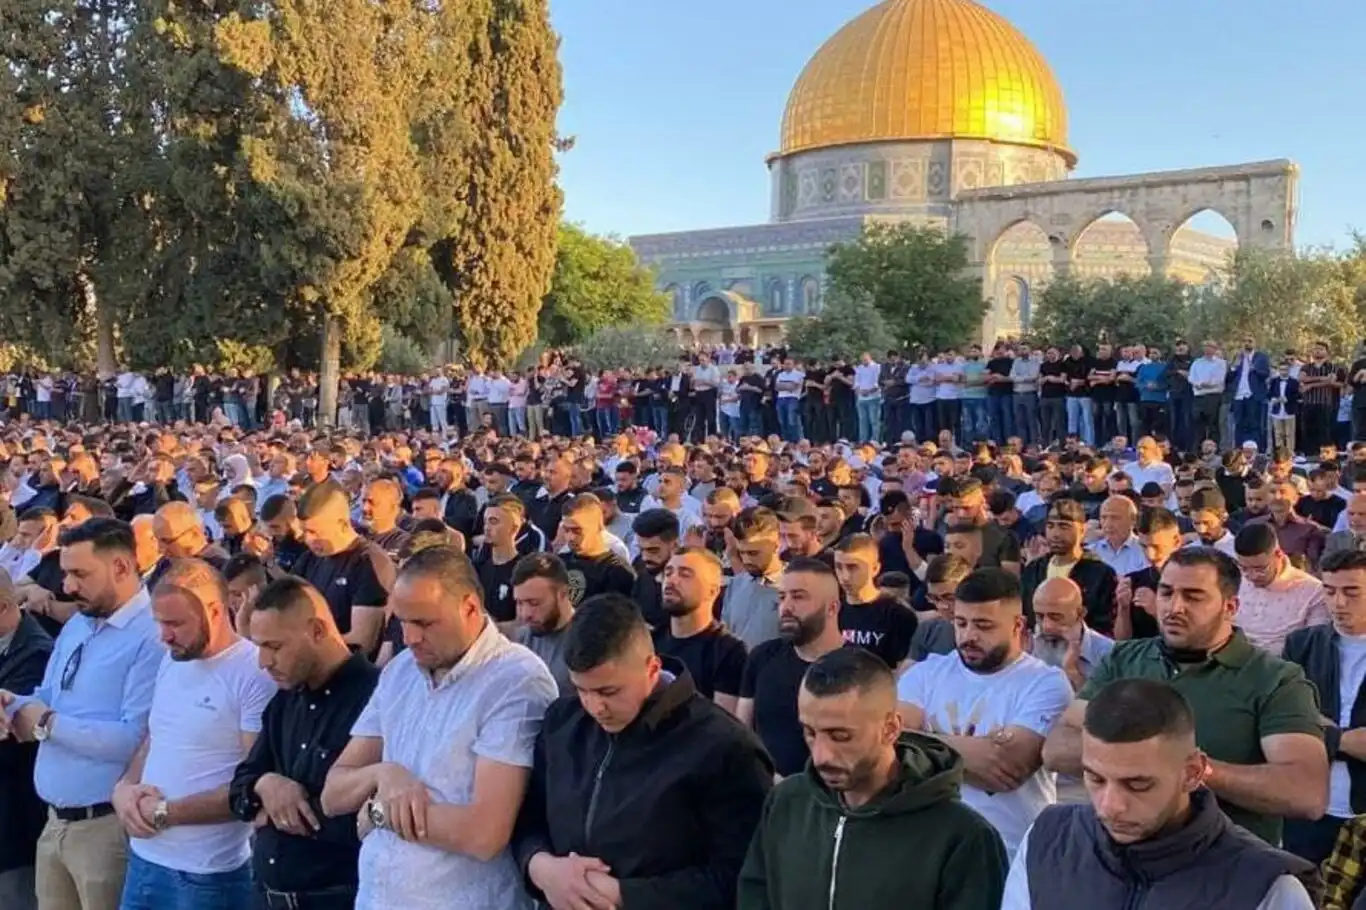 Over 40,000 worshippers attend Eid al-Adha prayers at Al-Aqsa Mosque amid Israeli restrictions